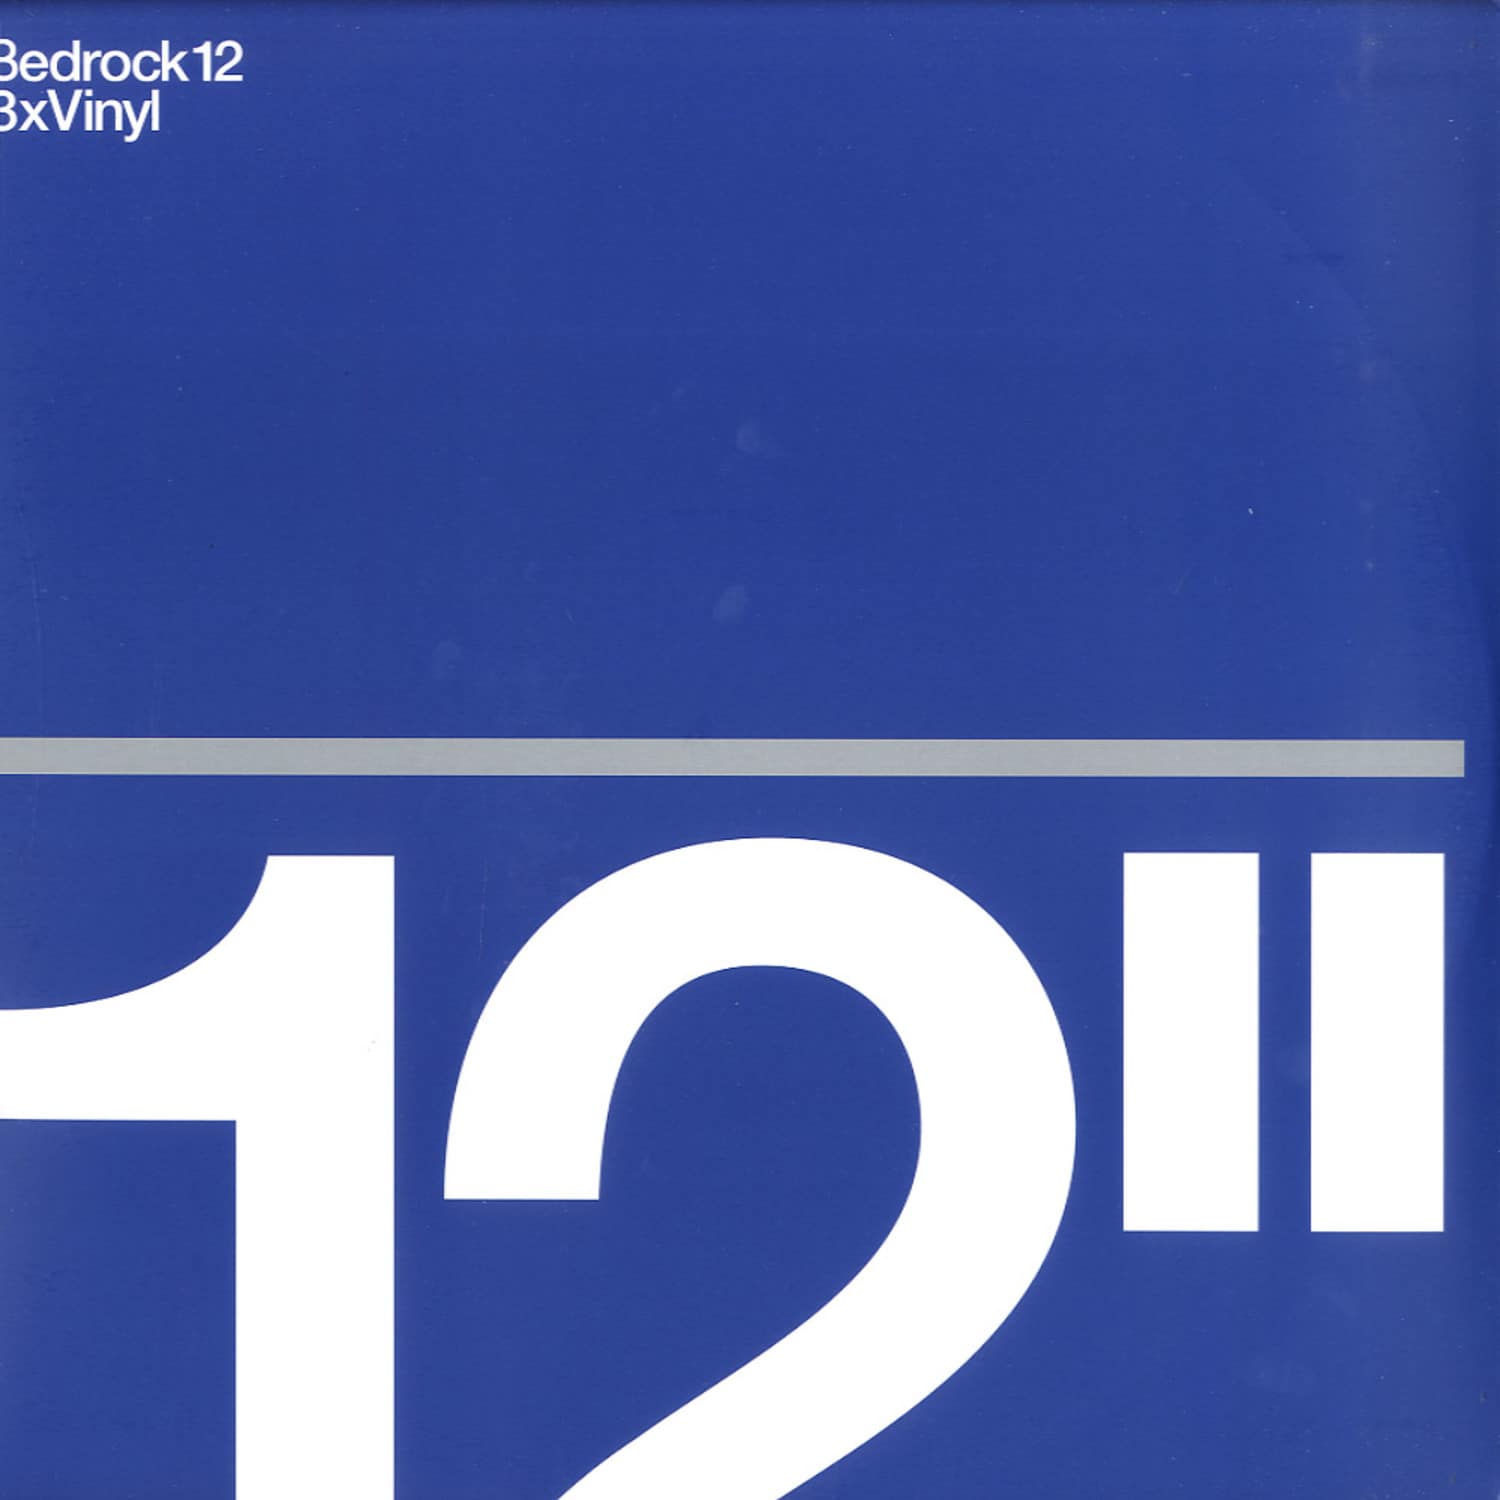 V/A compiled by John Digweed - Bedrock 12 Vinyl 1